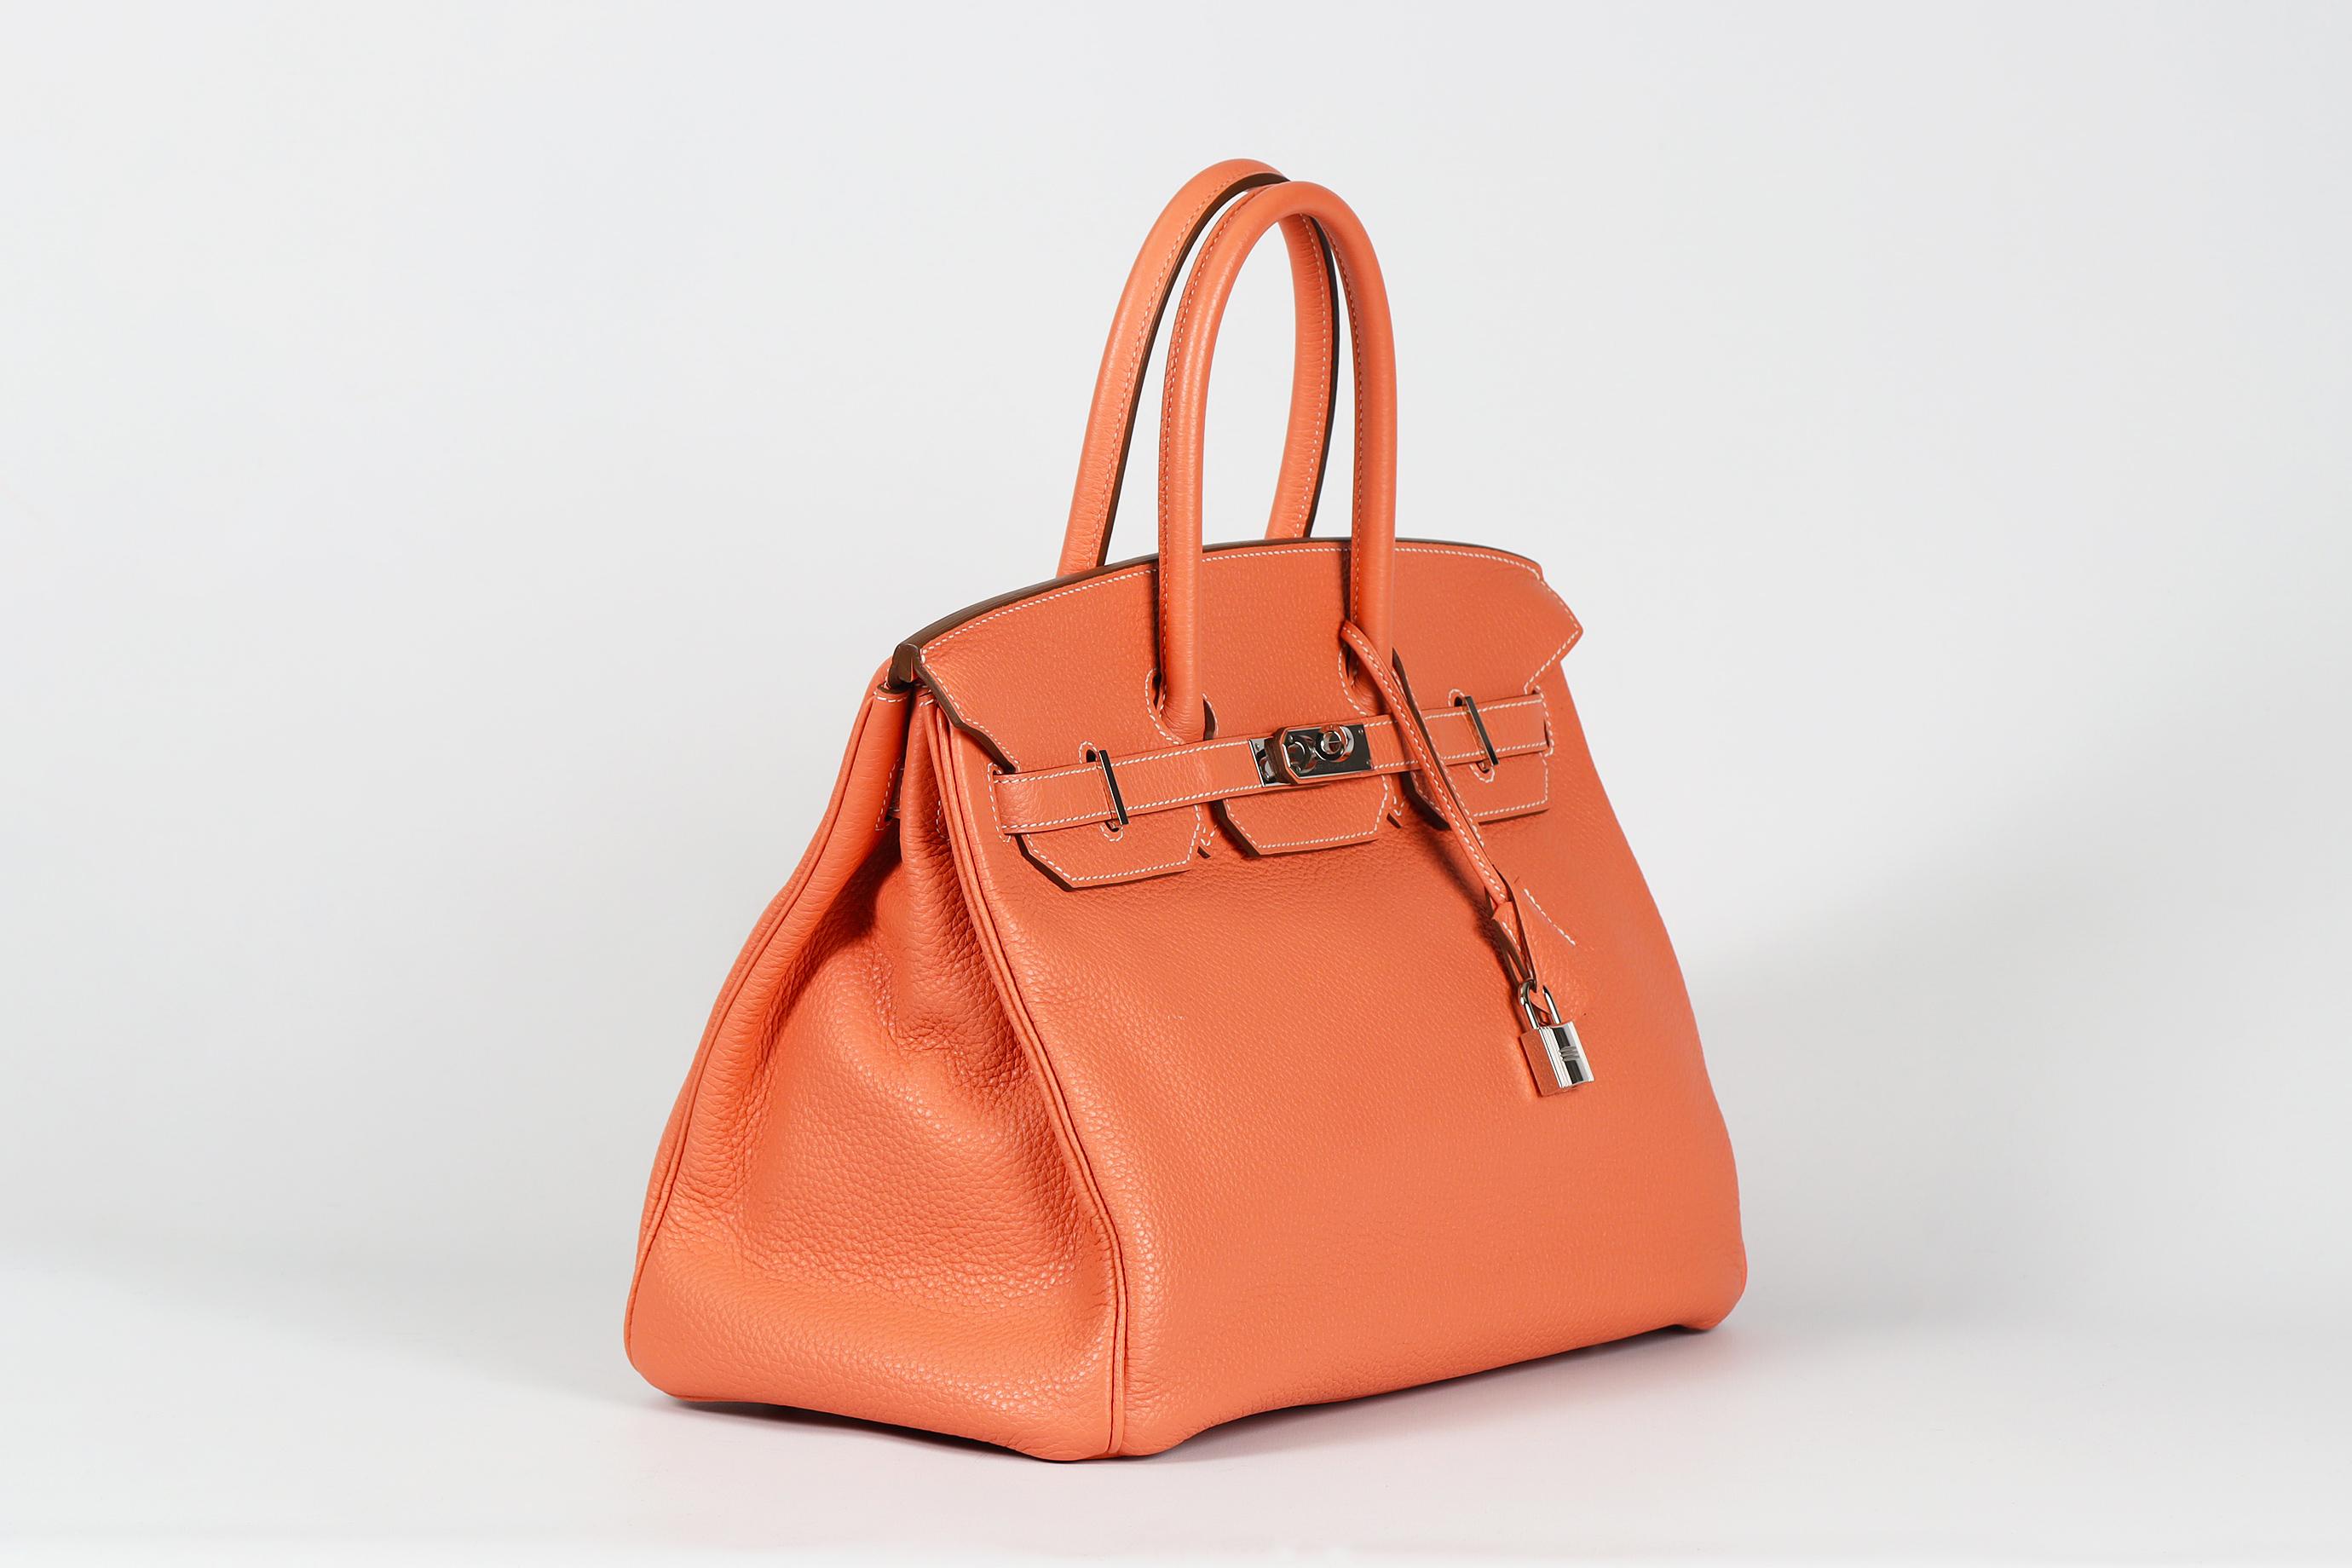 Hermès 2013 Birkin 35cm Clemence Leather Bag For Sale 3